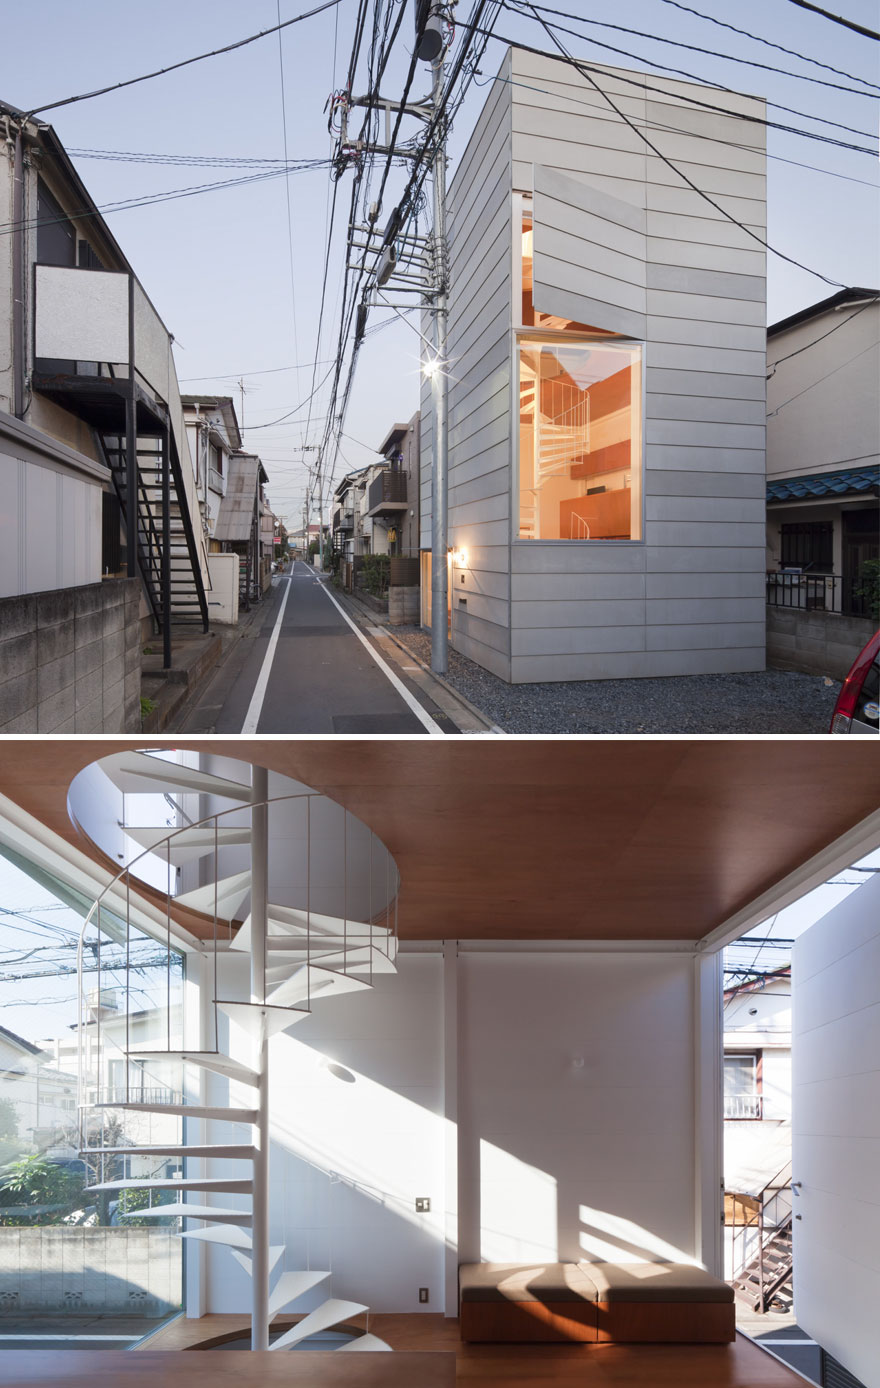 Unusual Japanese Architecture (15 pics)